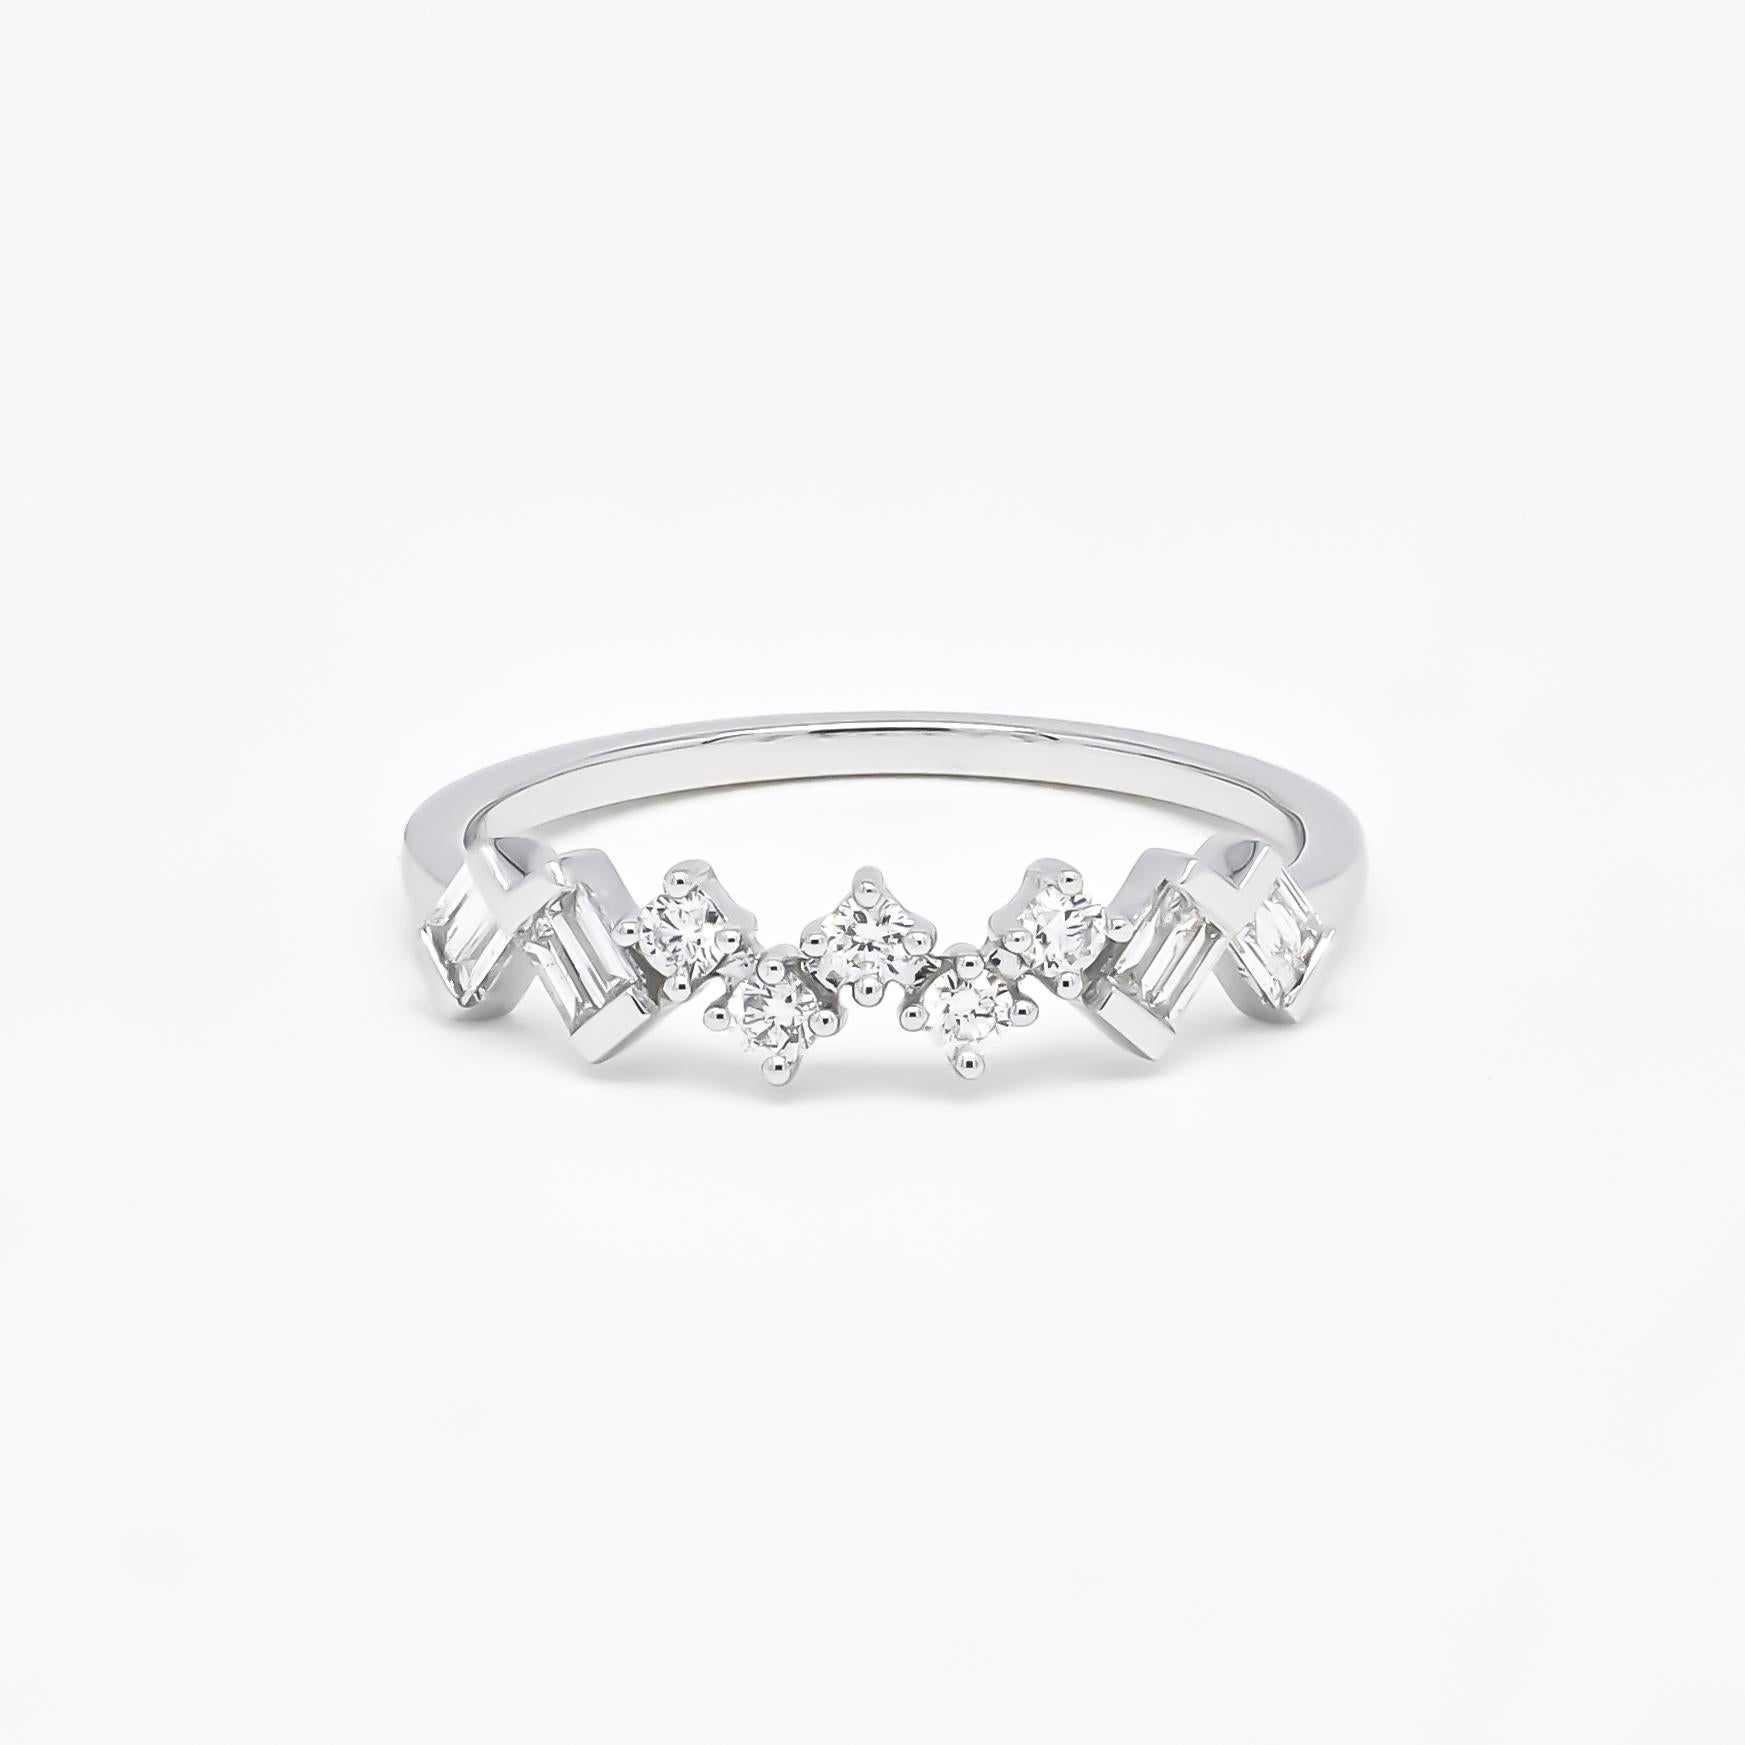 For Sale:  Natural Diamond Ring 18k White Gold Single Row Ring, Minimalistic Diamond Ring 5